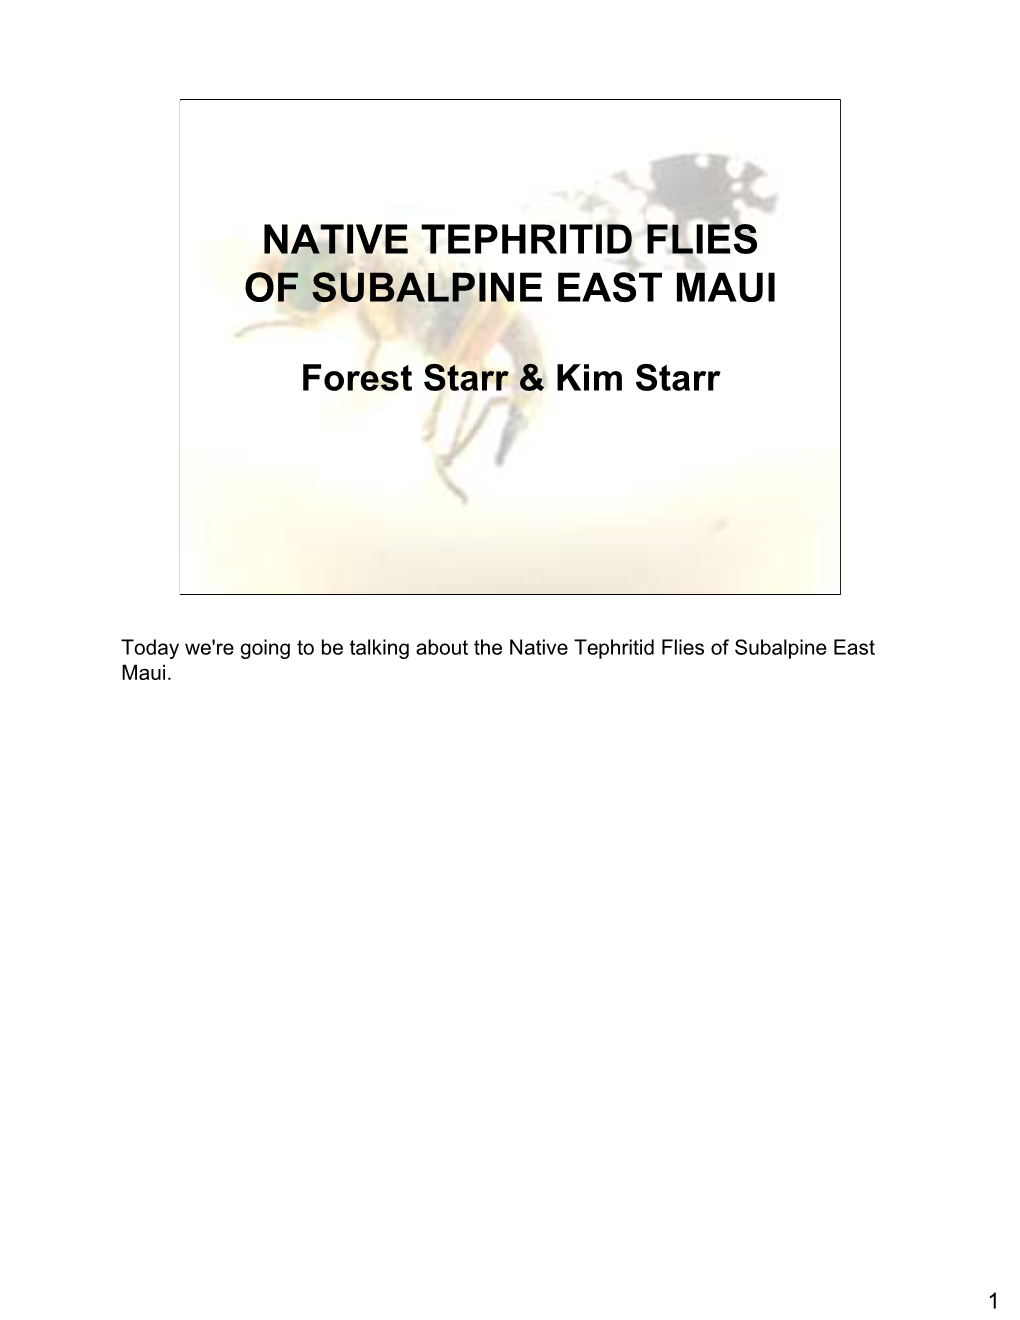 Native Tephritid Flies of Subalpine East Maui